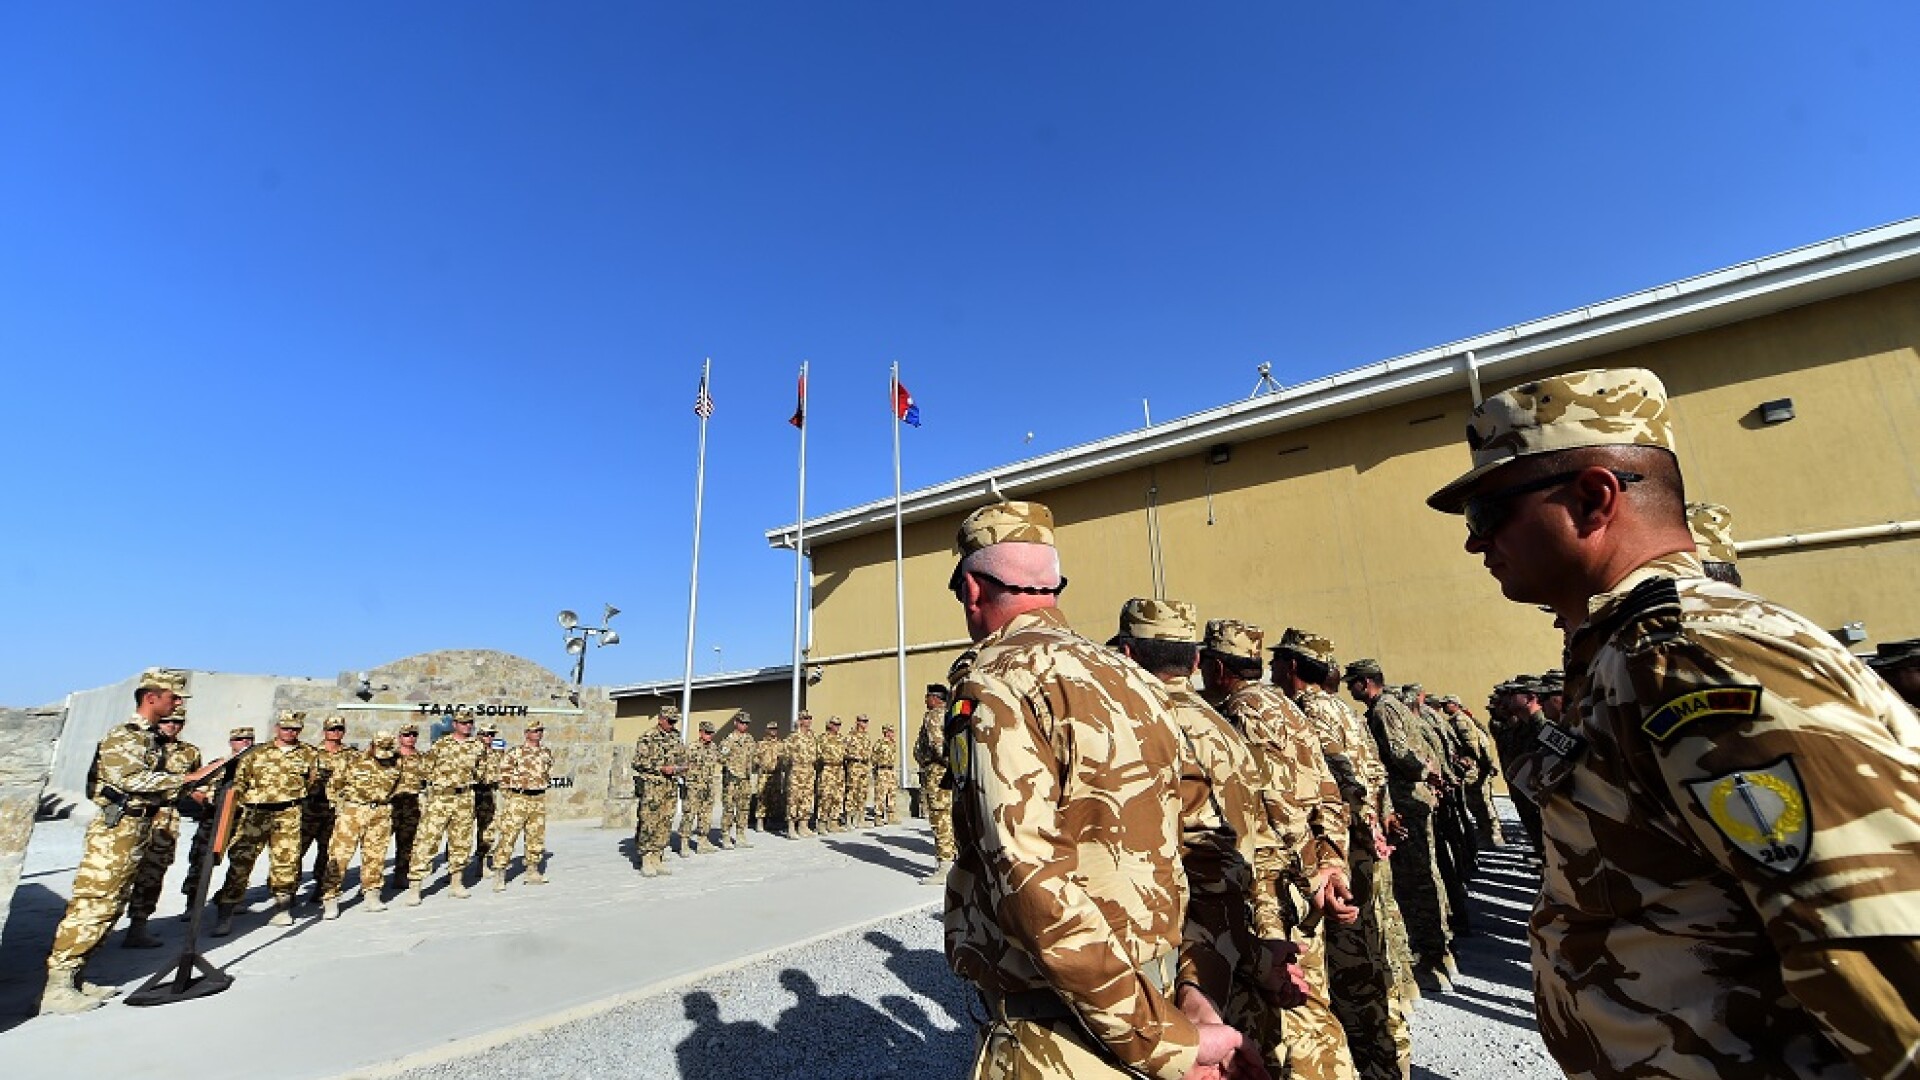 Mai multi ofiteri si subofiteri din armata romana participa la ceremonia transferului de autoritate intre rotatia 3 si rotatia 4 a echipei romane TAAC-South in baza militara din Kandahar, Afganistan.